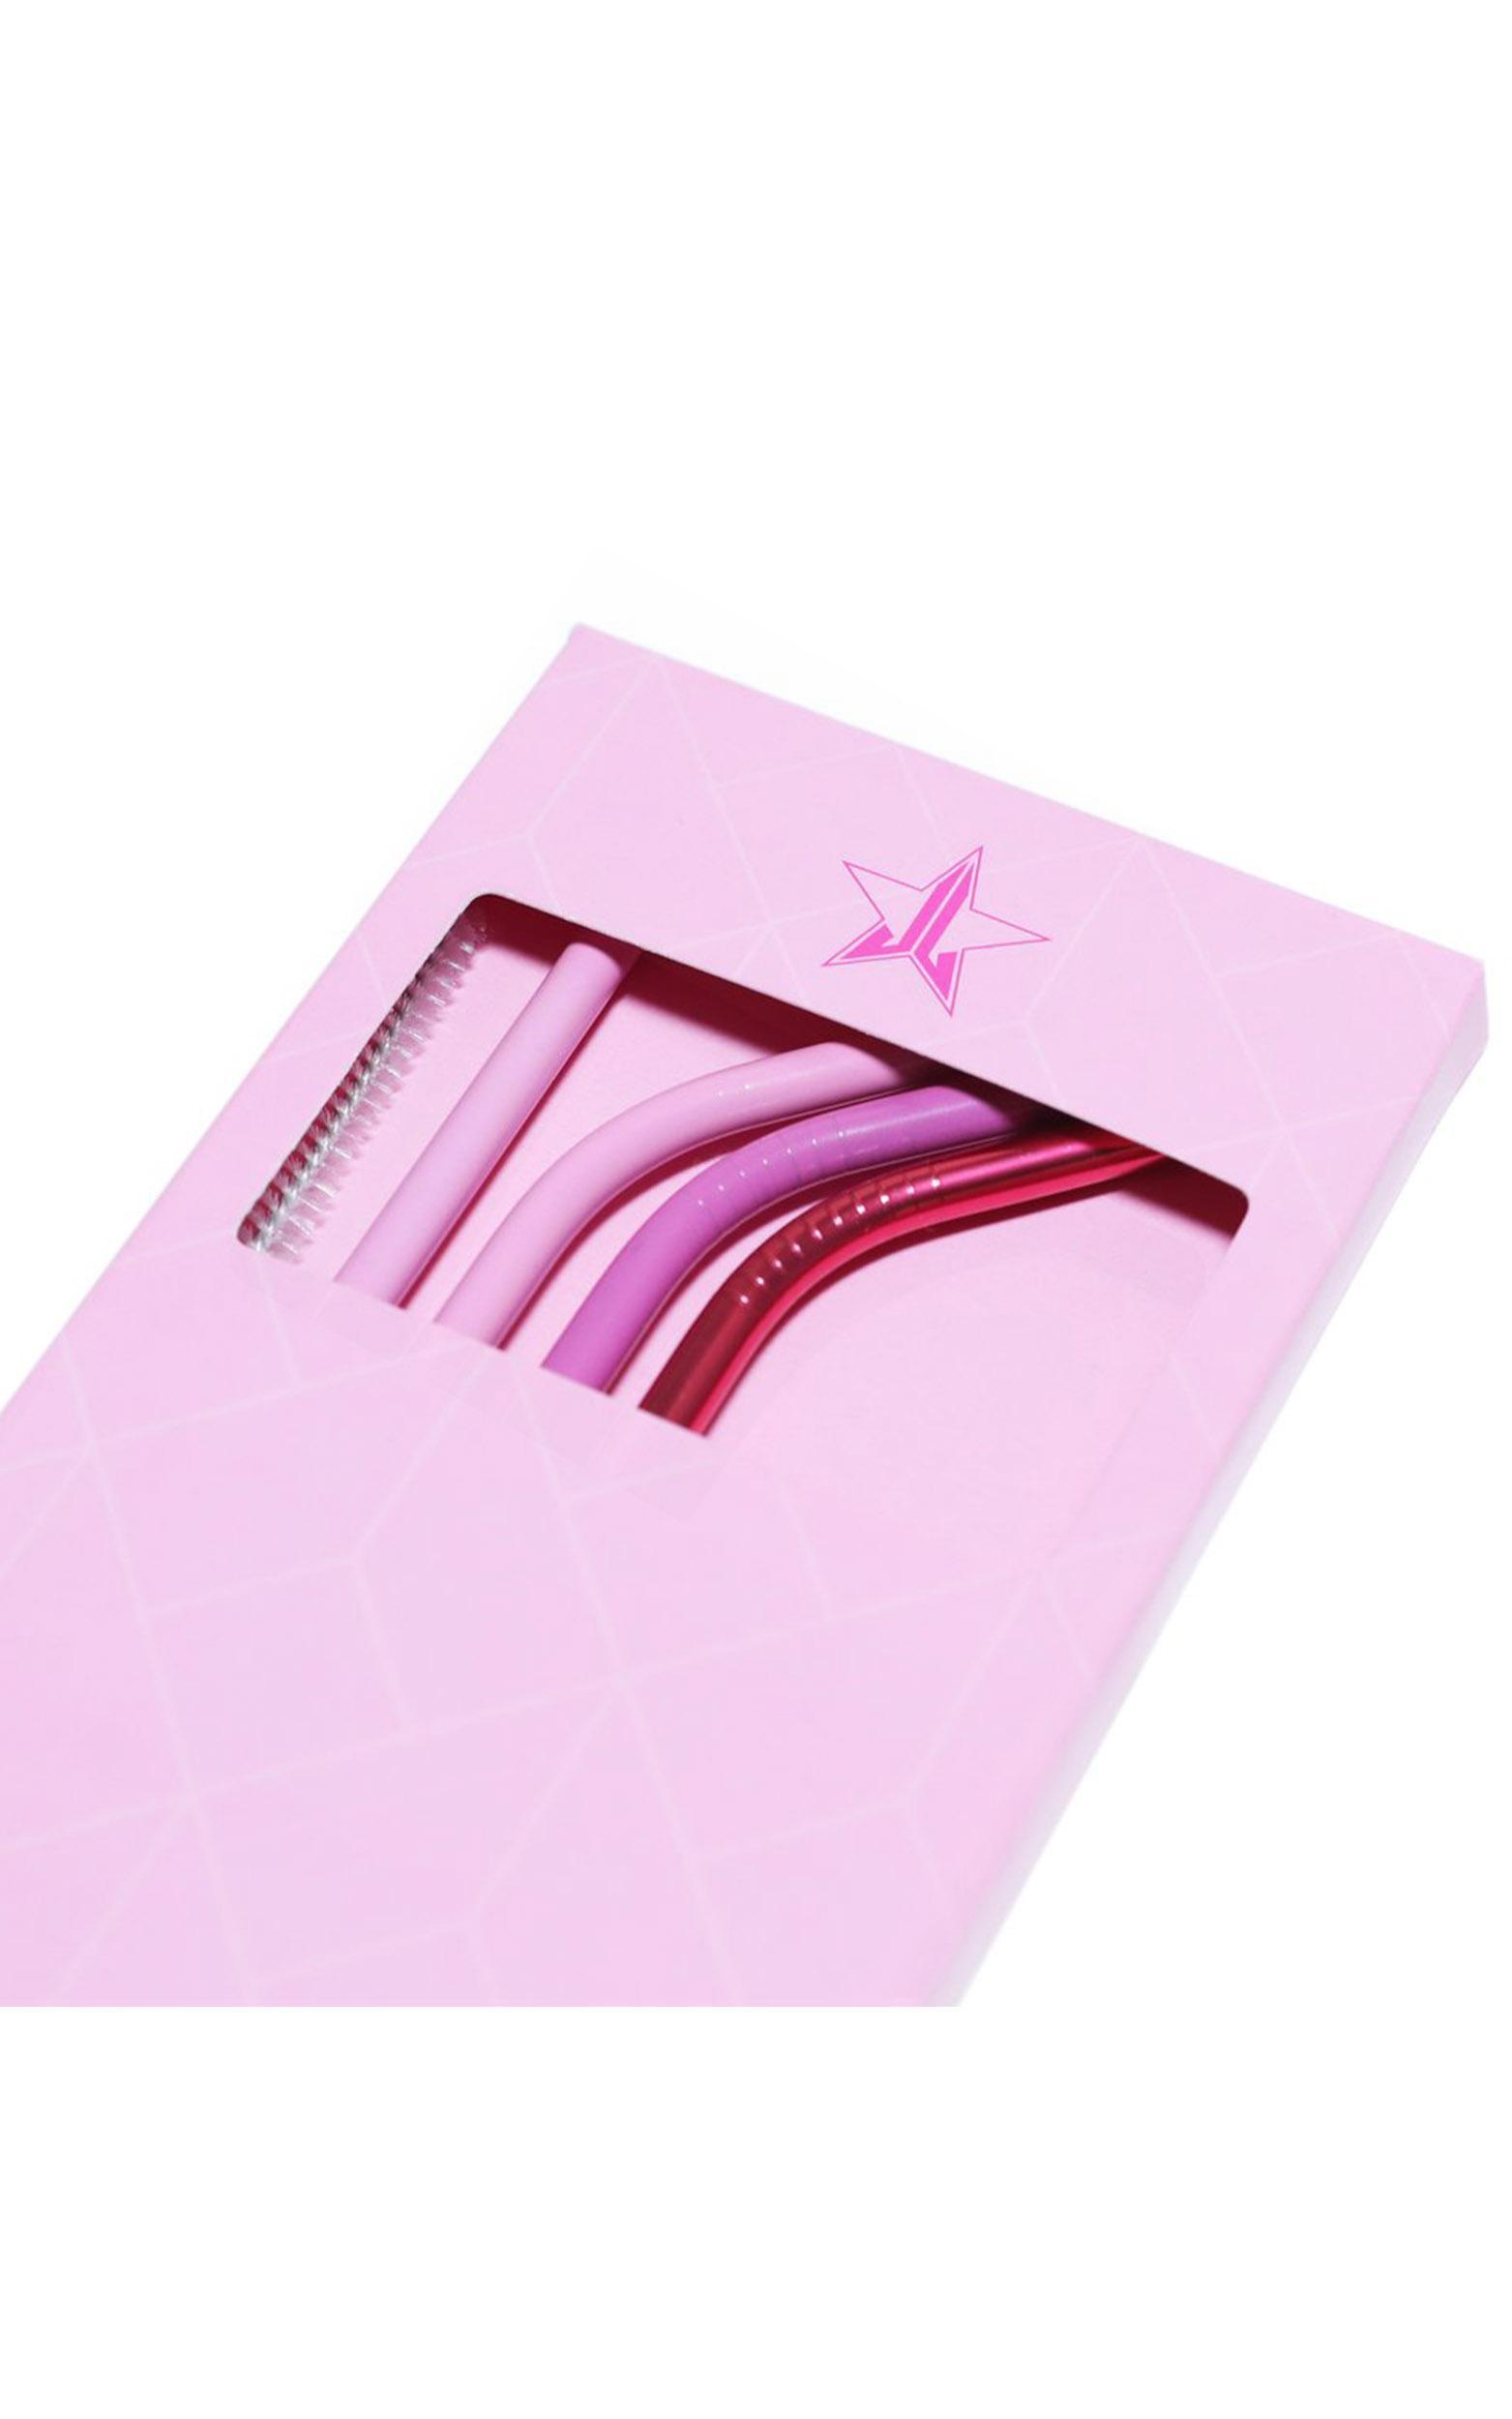 Jeffree Star Cosmetics - Metal Straw 4 Pack In Pink, Pink, hi-res image number null